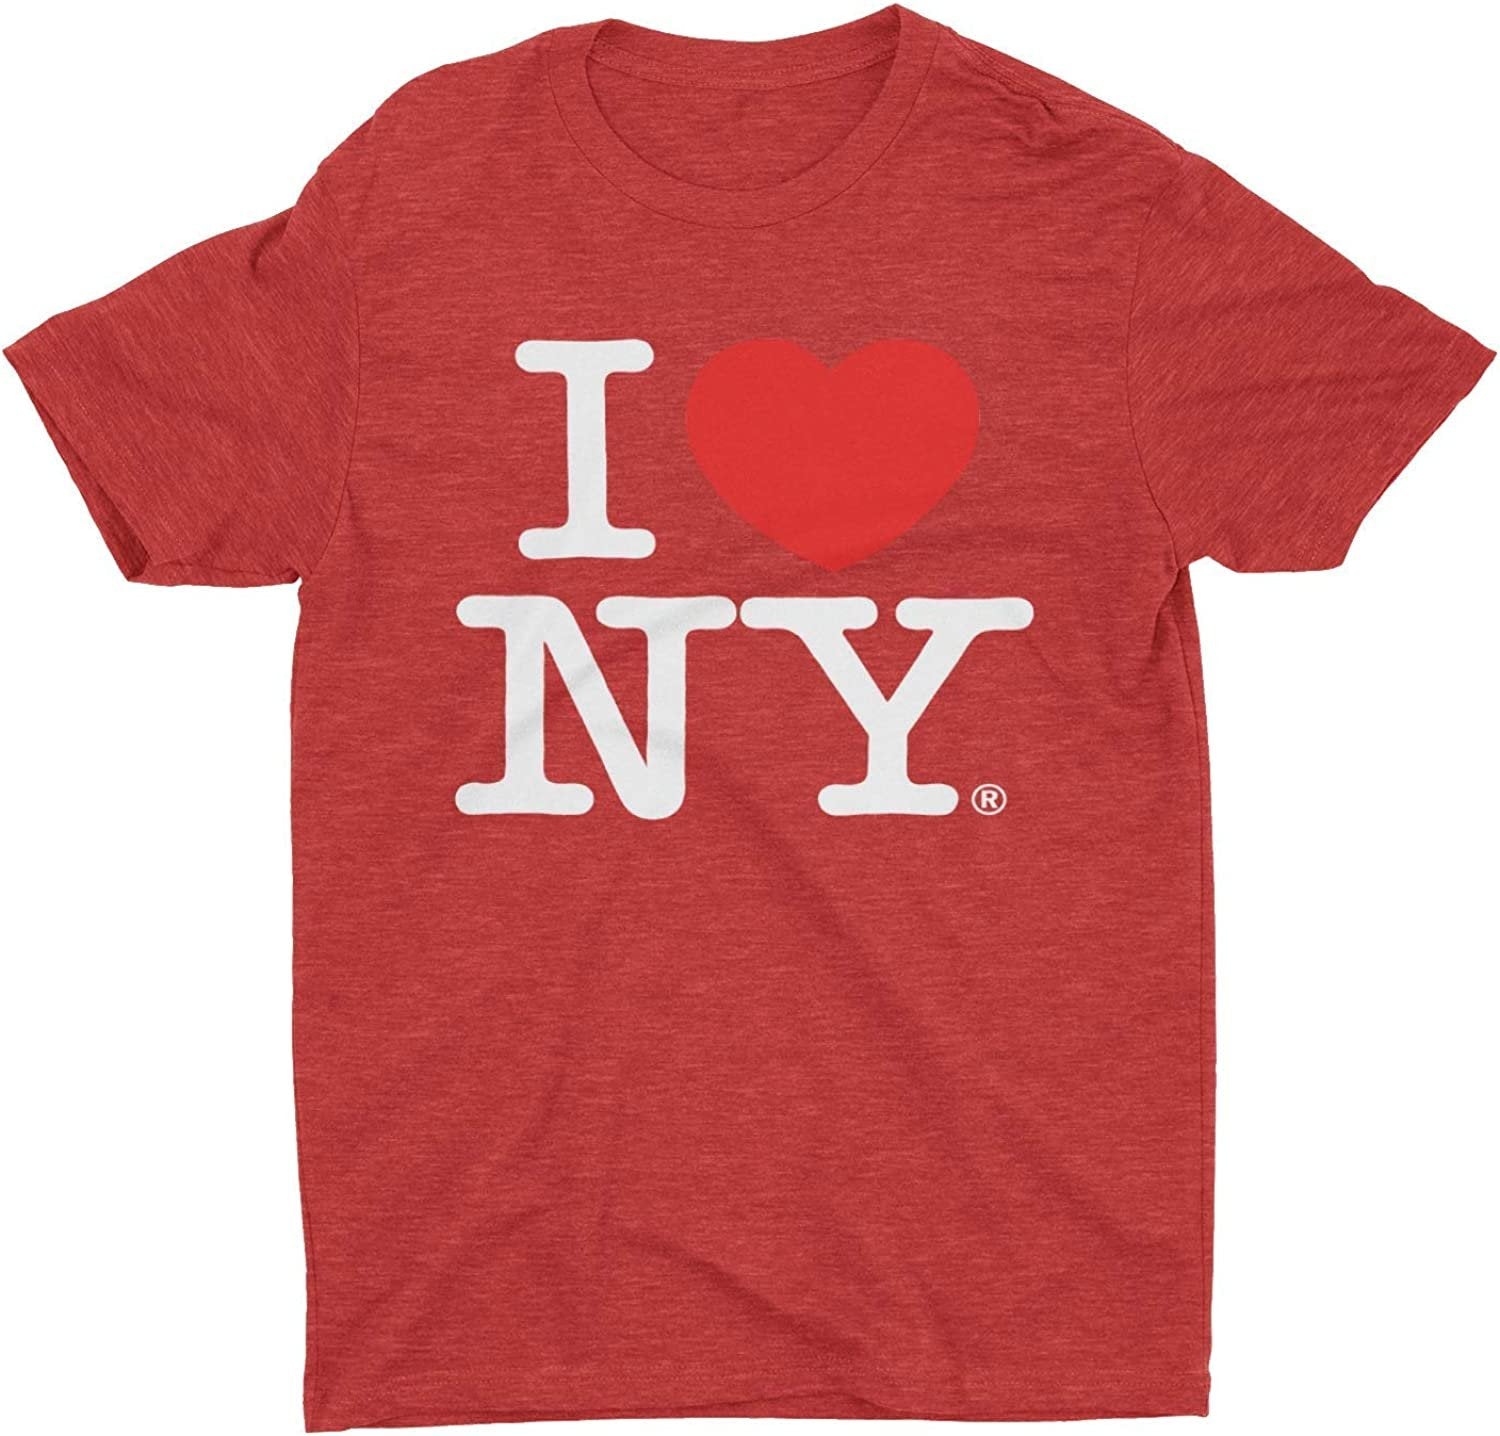 Ich liebe NY Retro Vintage T-Shirt Heather Red